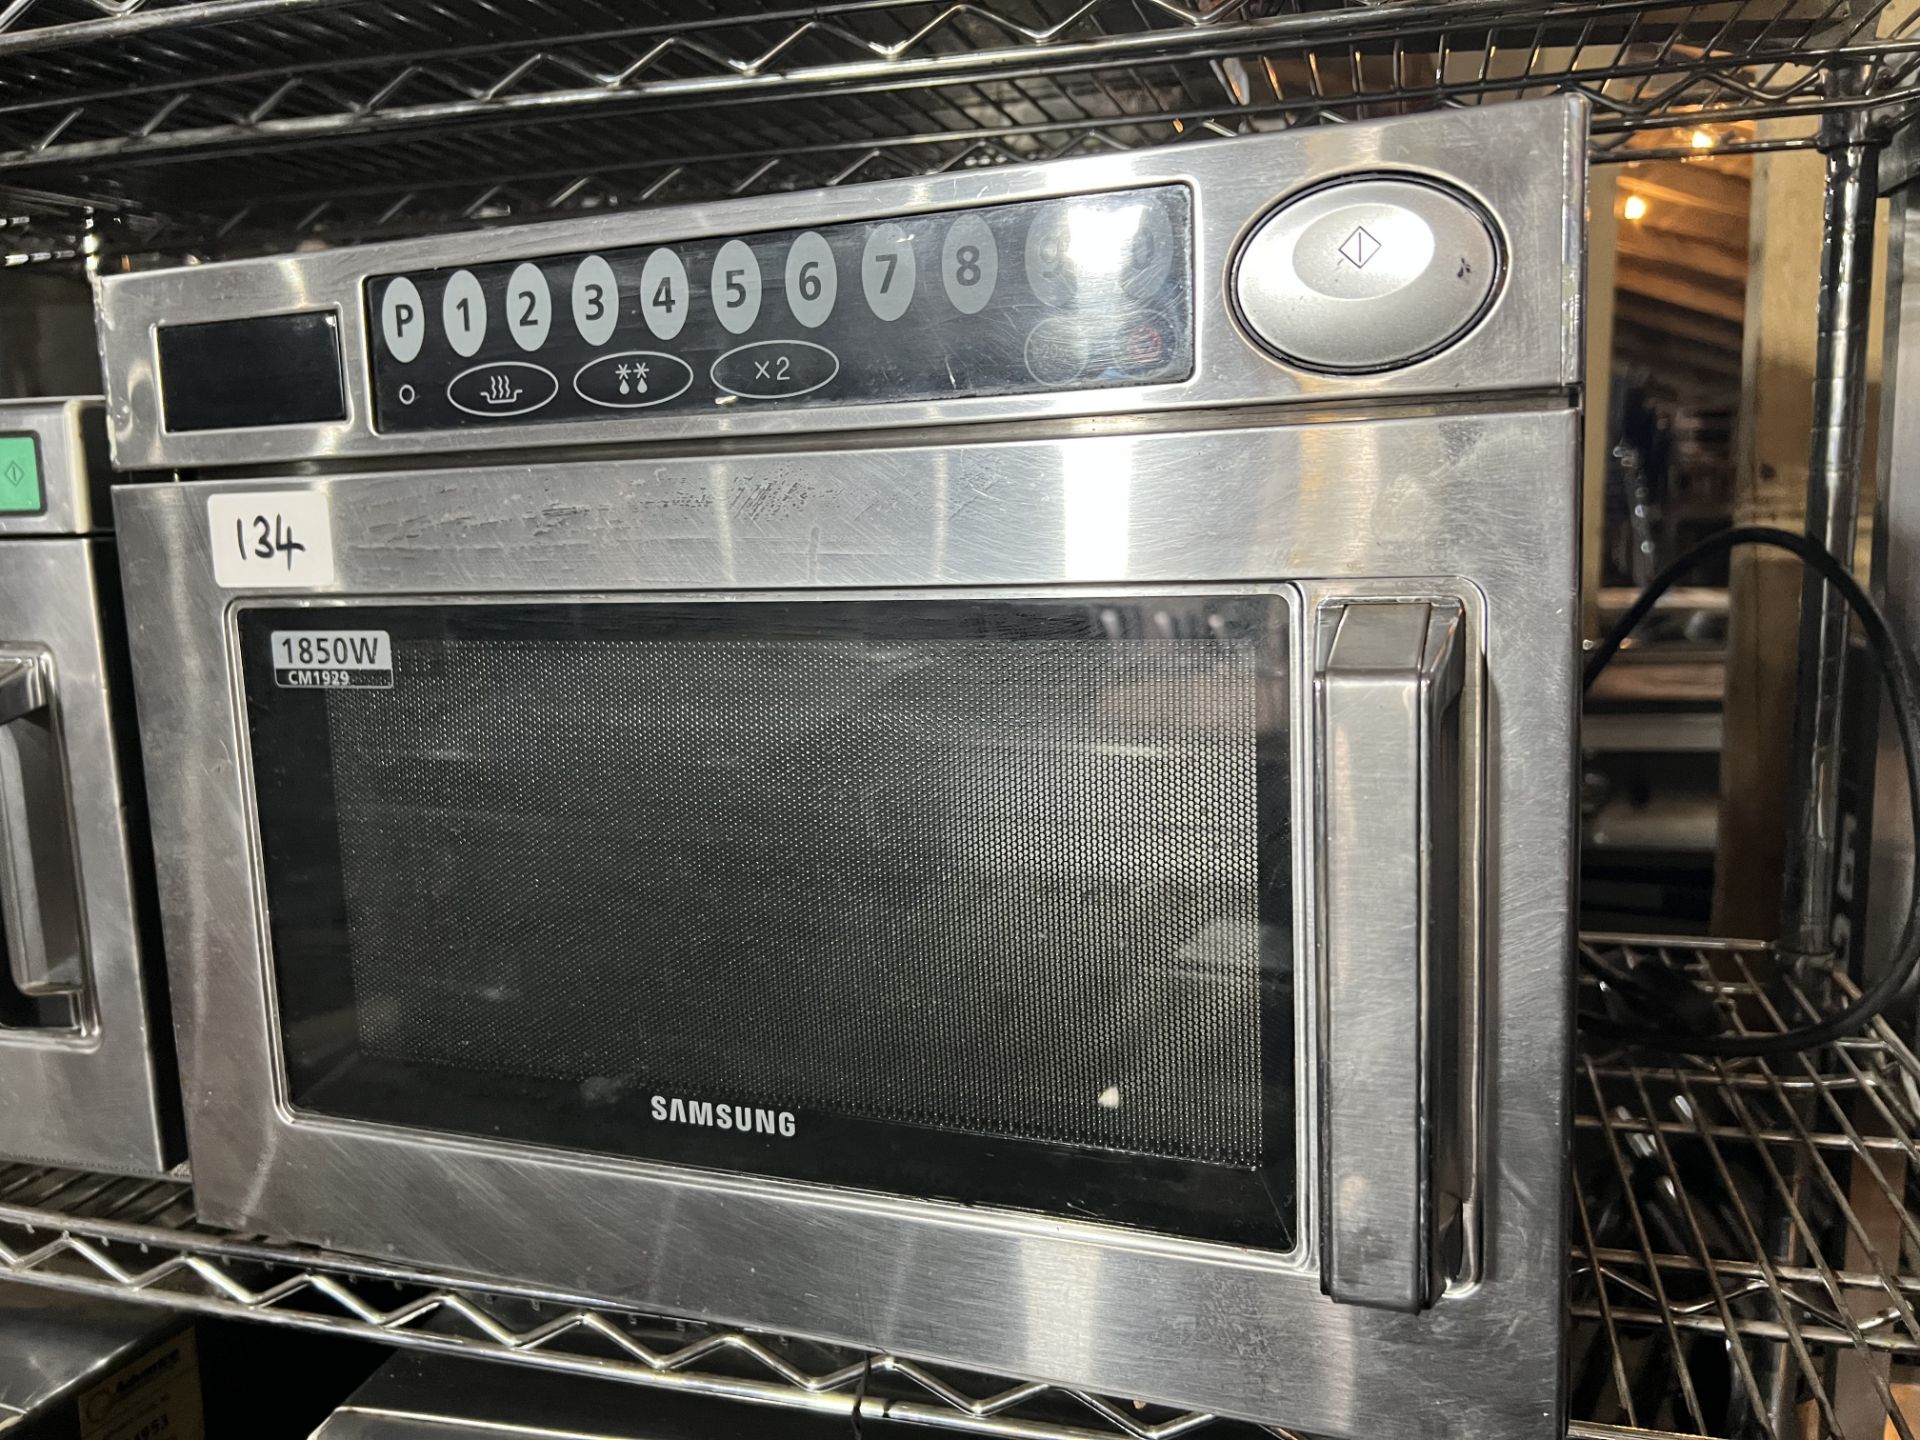 Samsung 1850w microwave